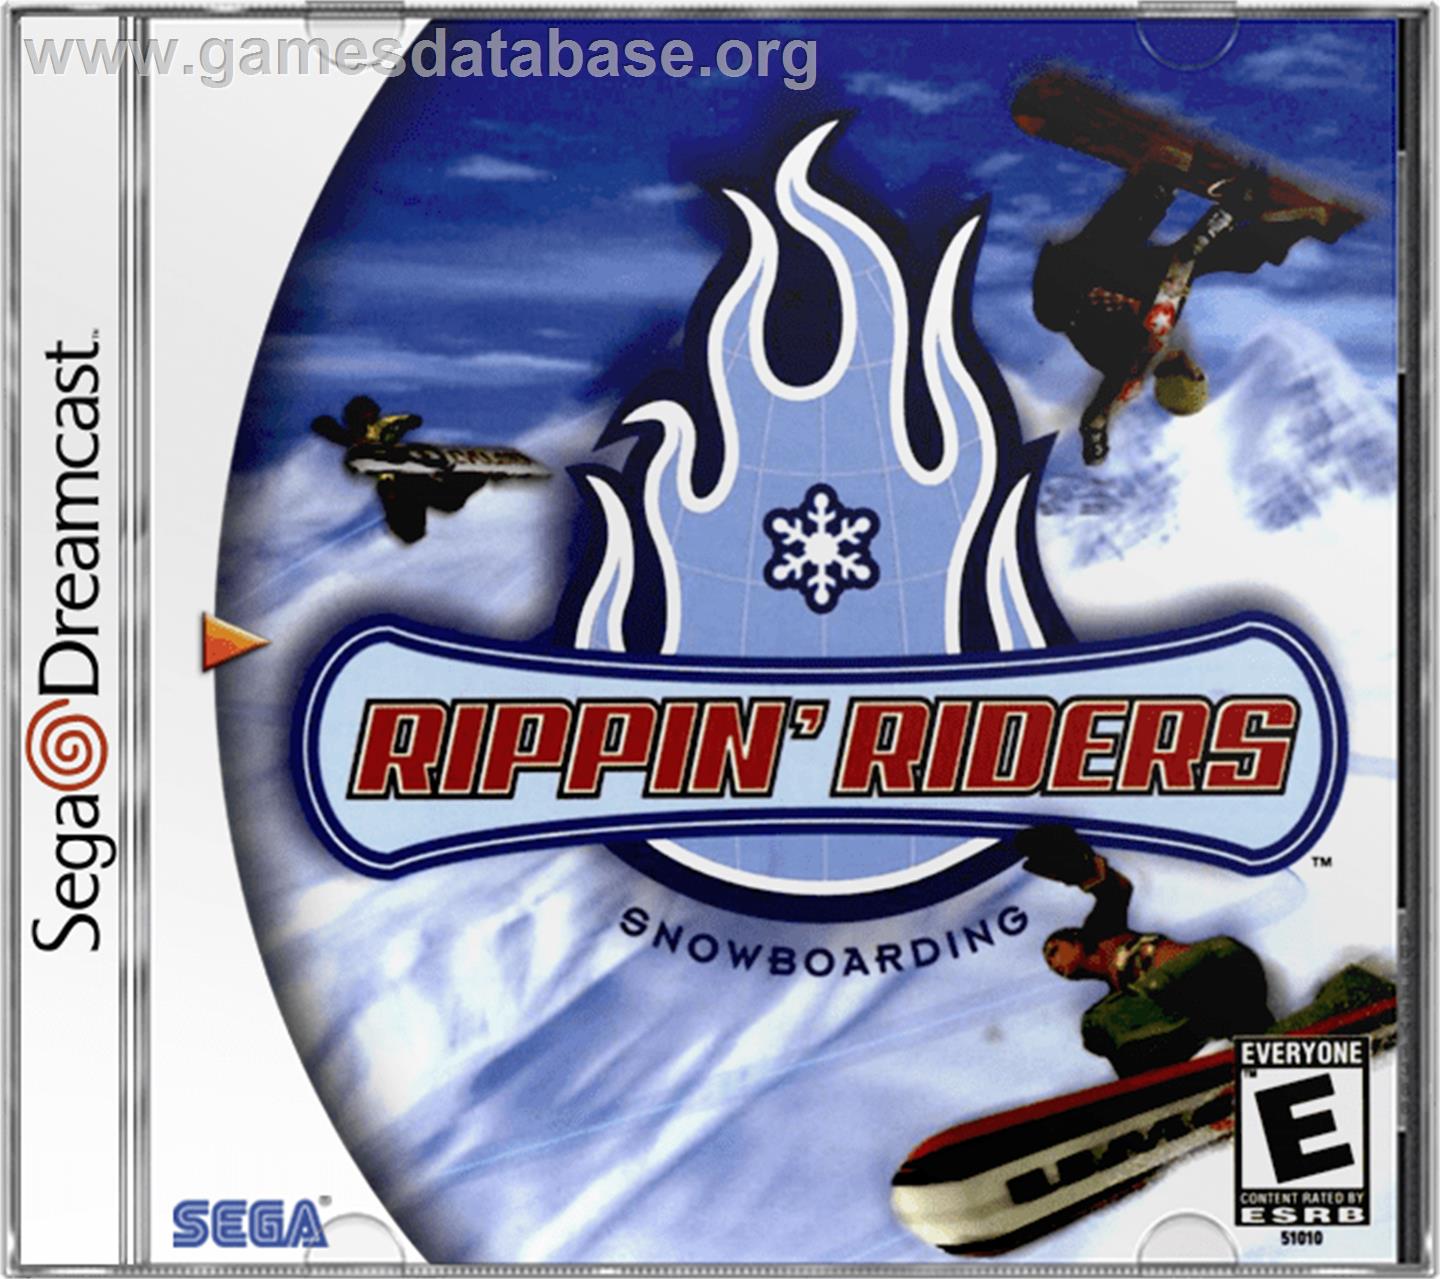 Rippin' Riders Snowboarding - Sega Dreamcast - Artwork - Box